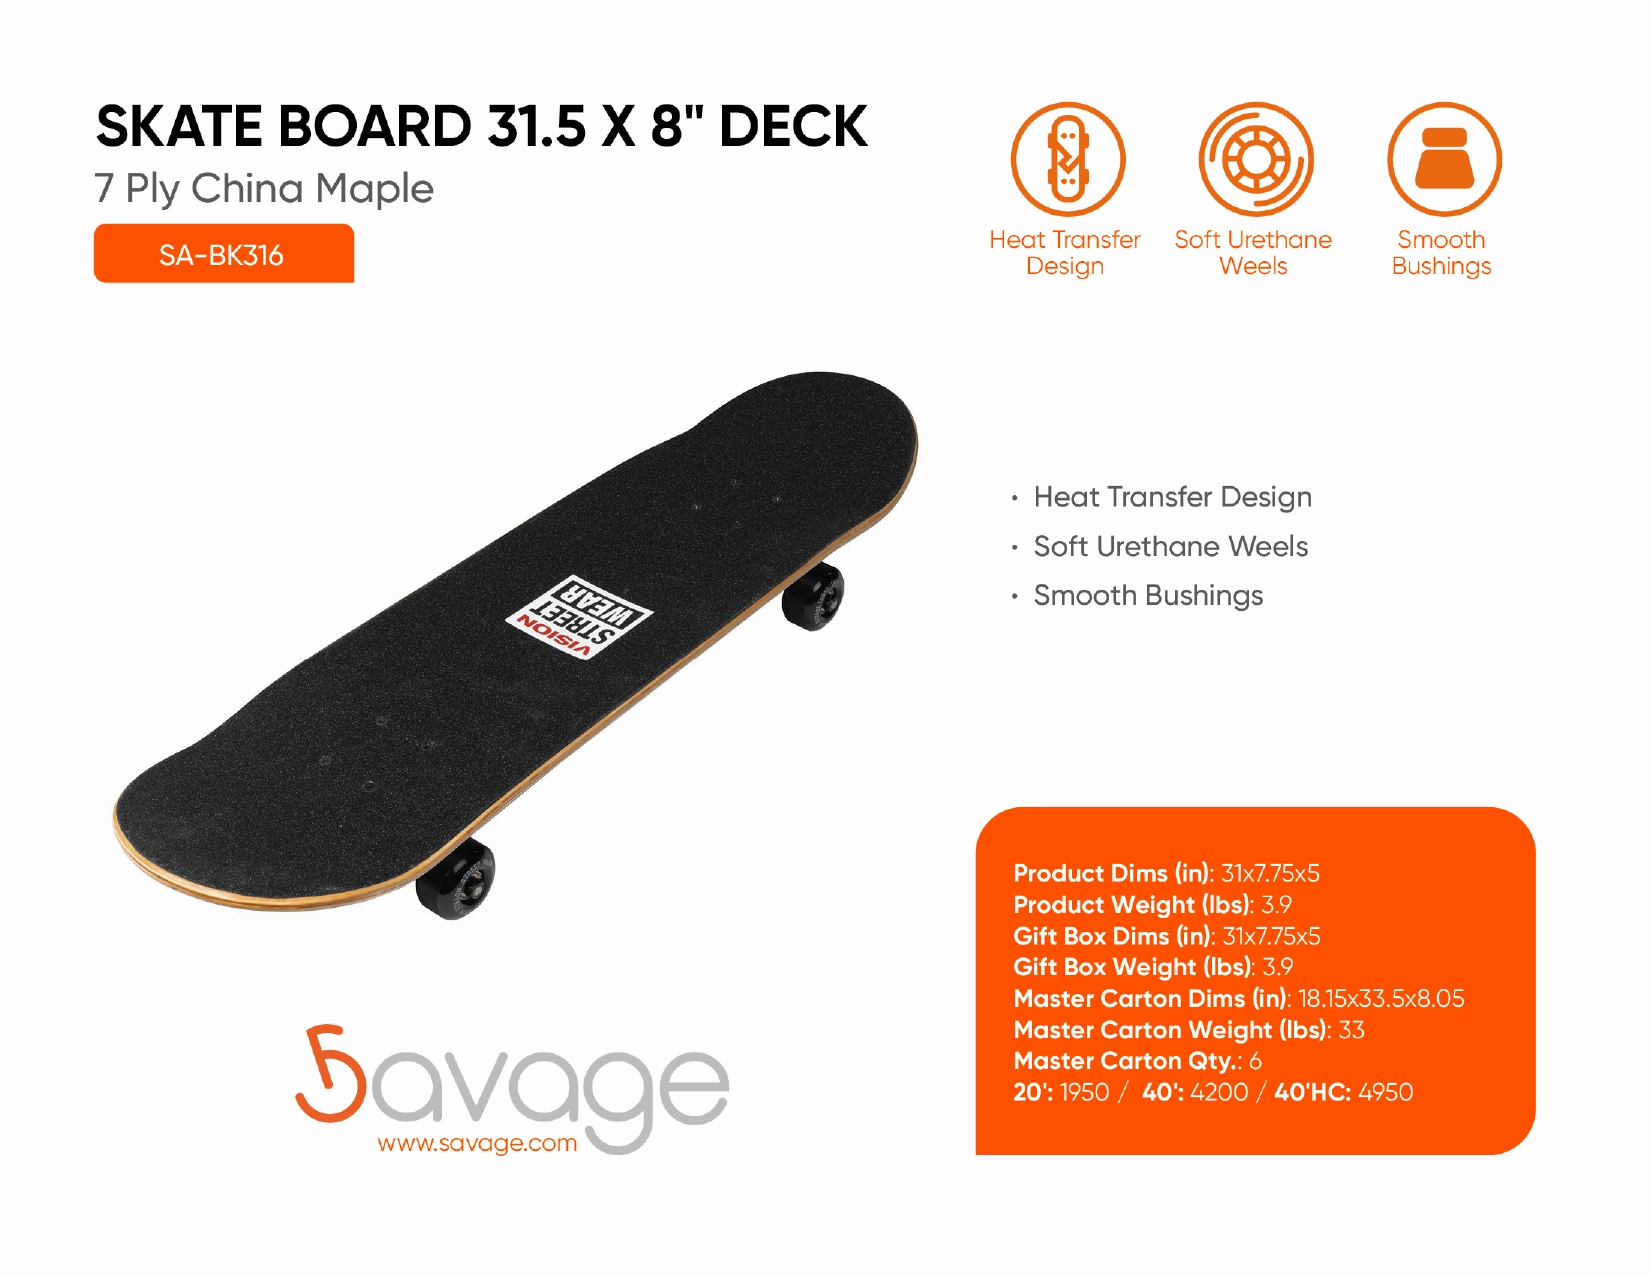 Skate Board 31.5 x 8" Deck